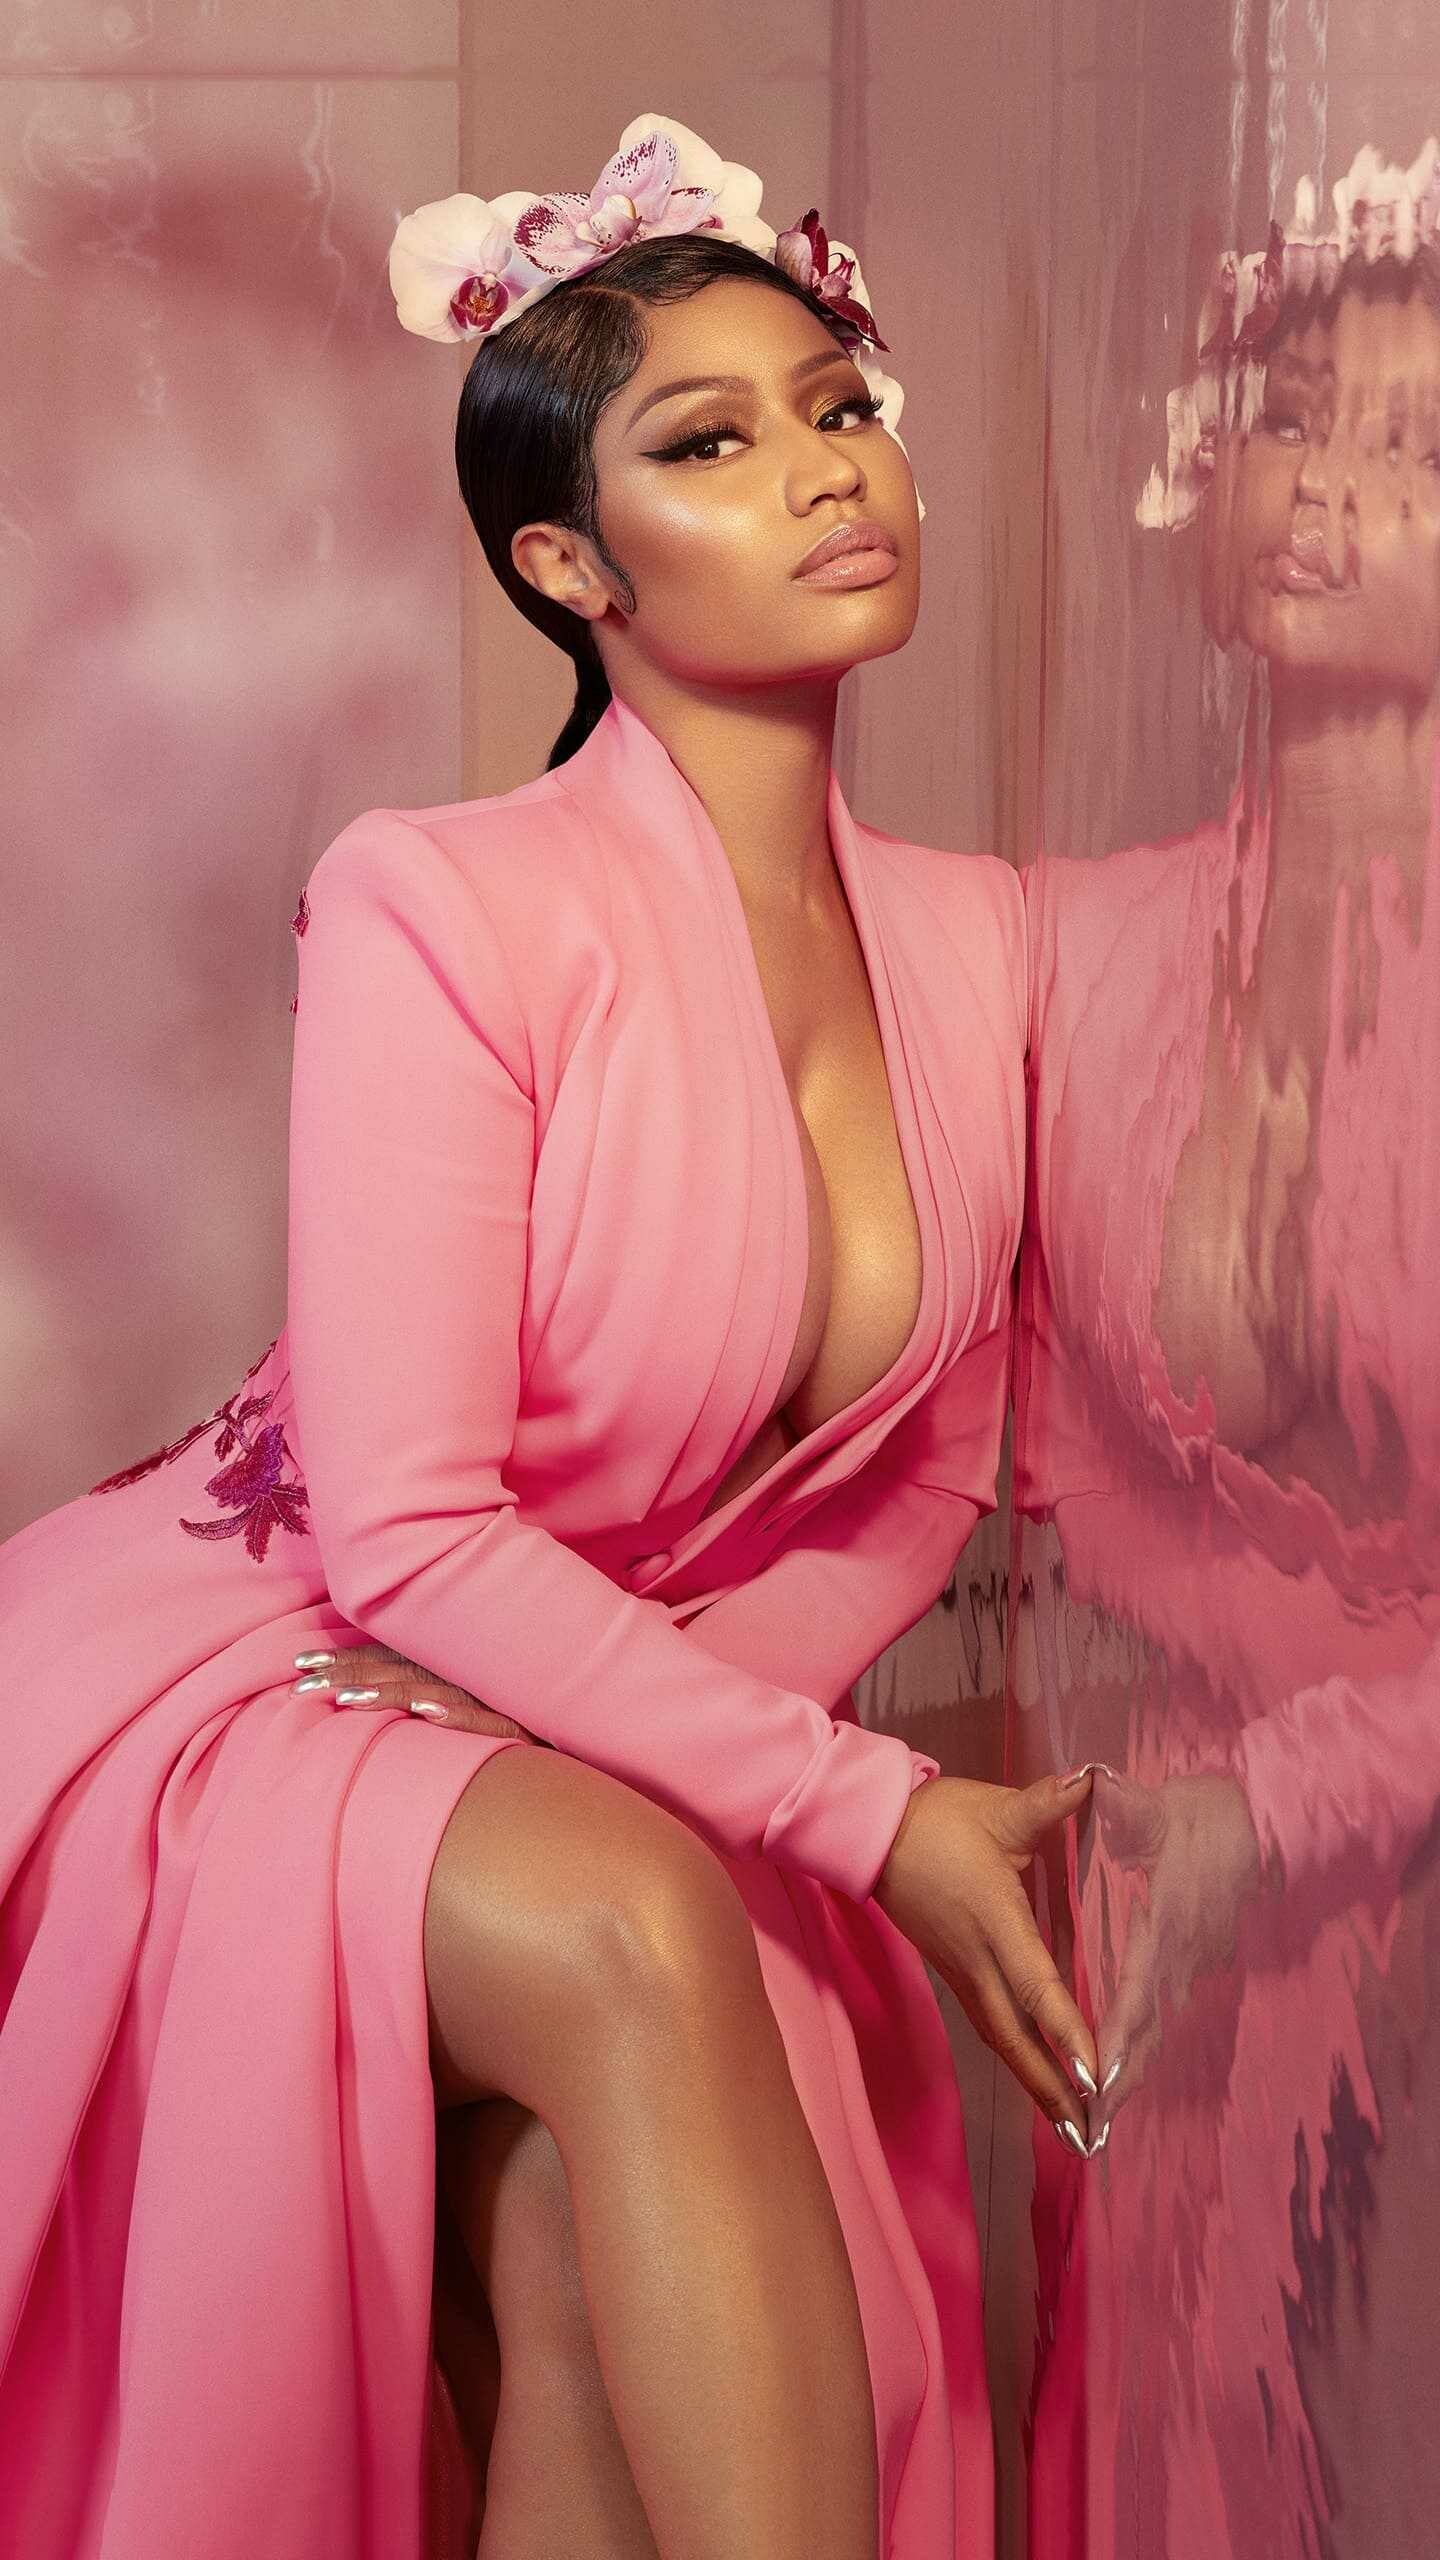 Nicki Minaj: “Anaconda”, The first music video by a solo female rapper to reach one billion views on YouTube. 1440x2560 HD Background.